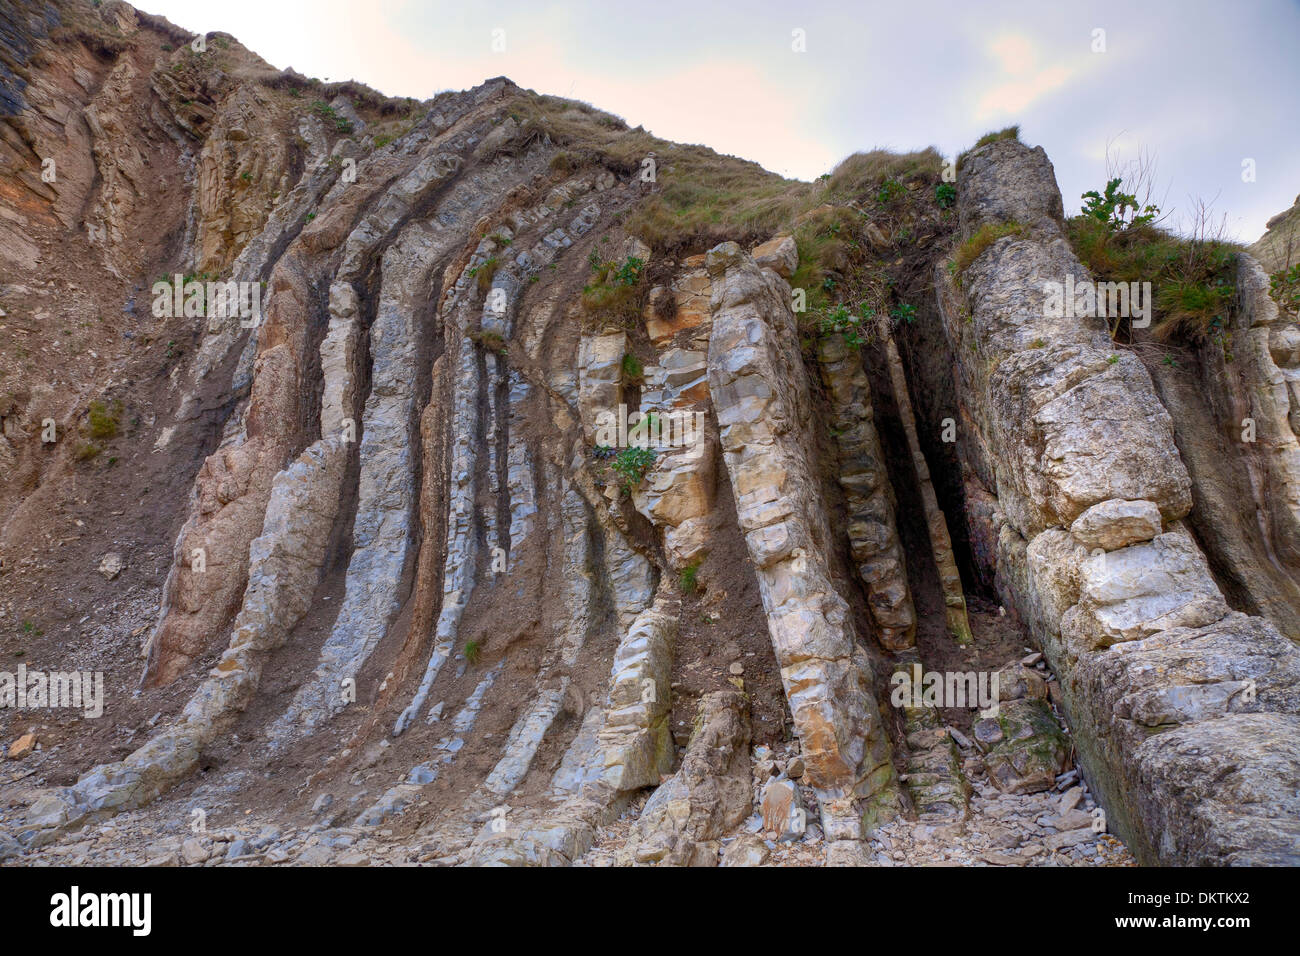 Rock formation at Man o' War Cove near Durdle Door on the Jurassic Coastline, Dorset, England. Stock Photo